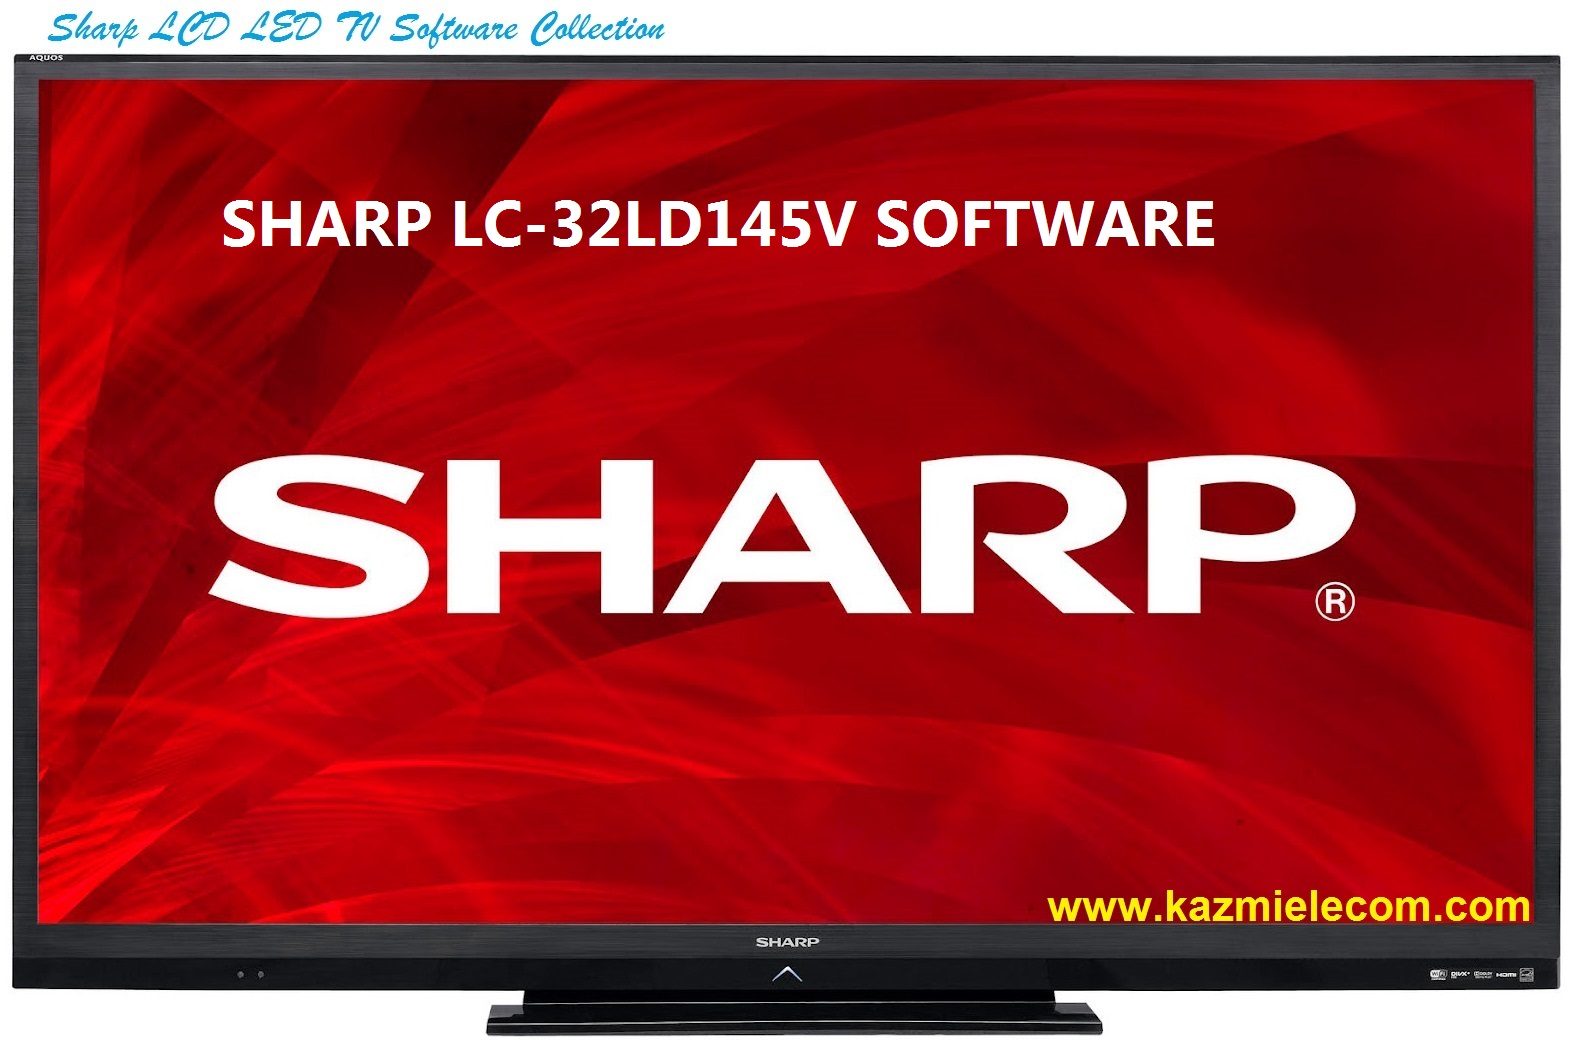 Sharp Lc-32Ld145V